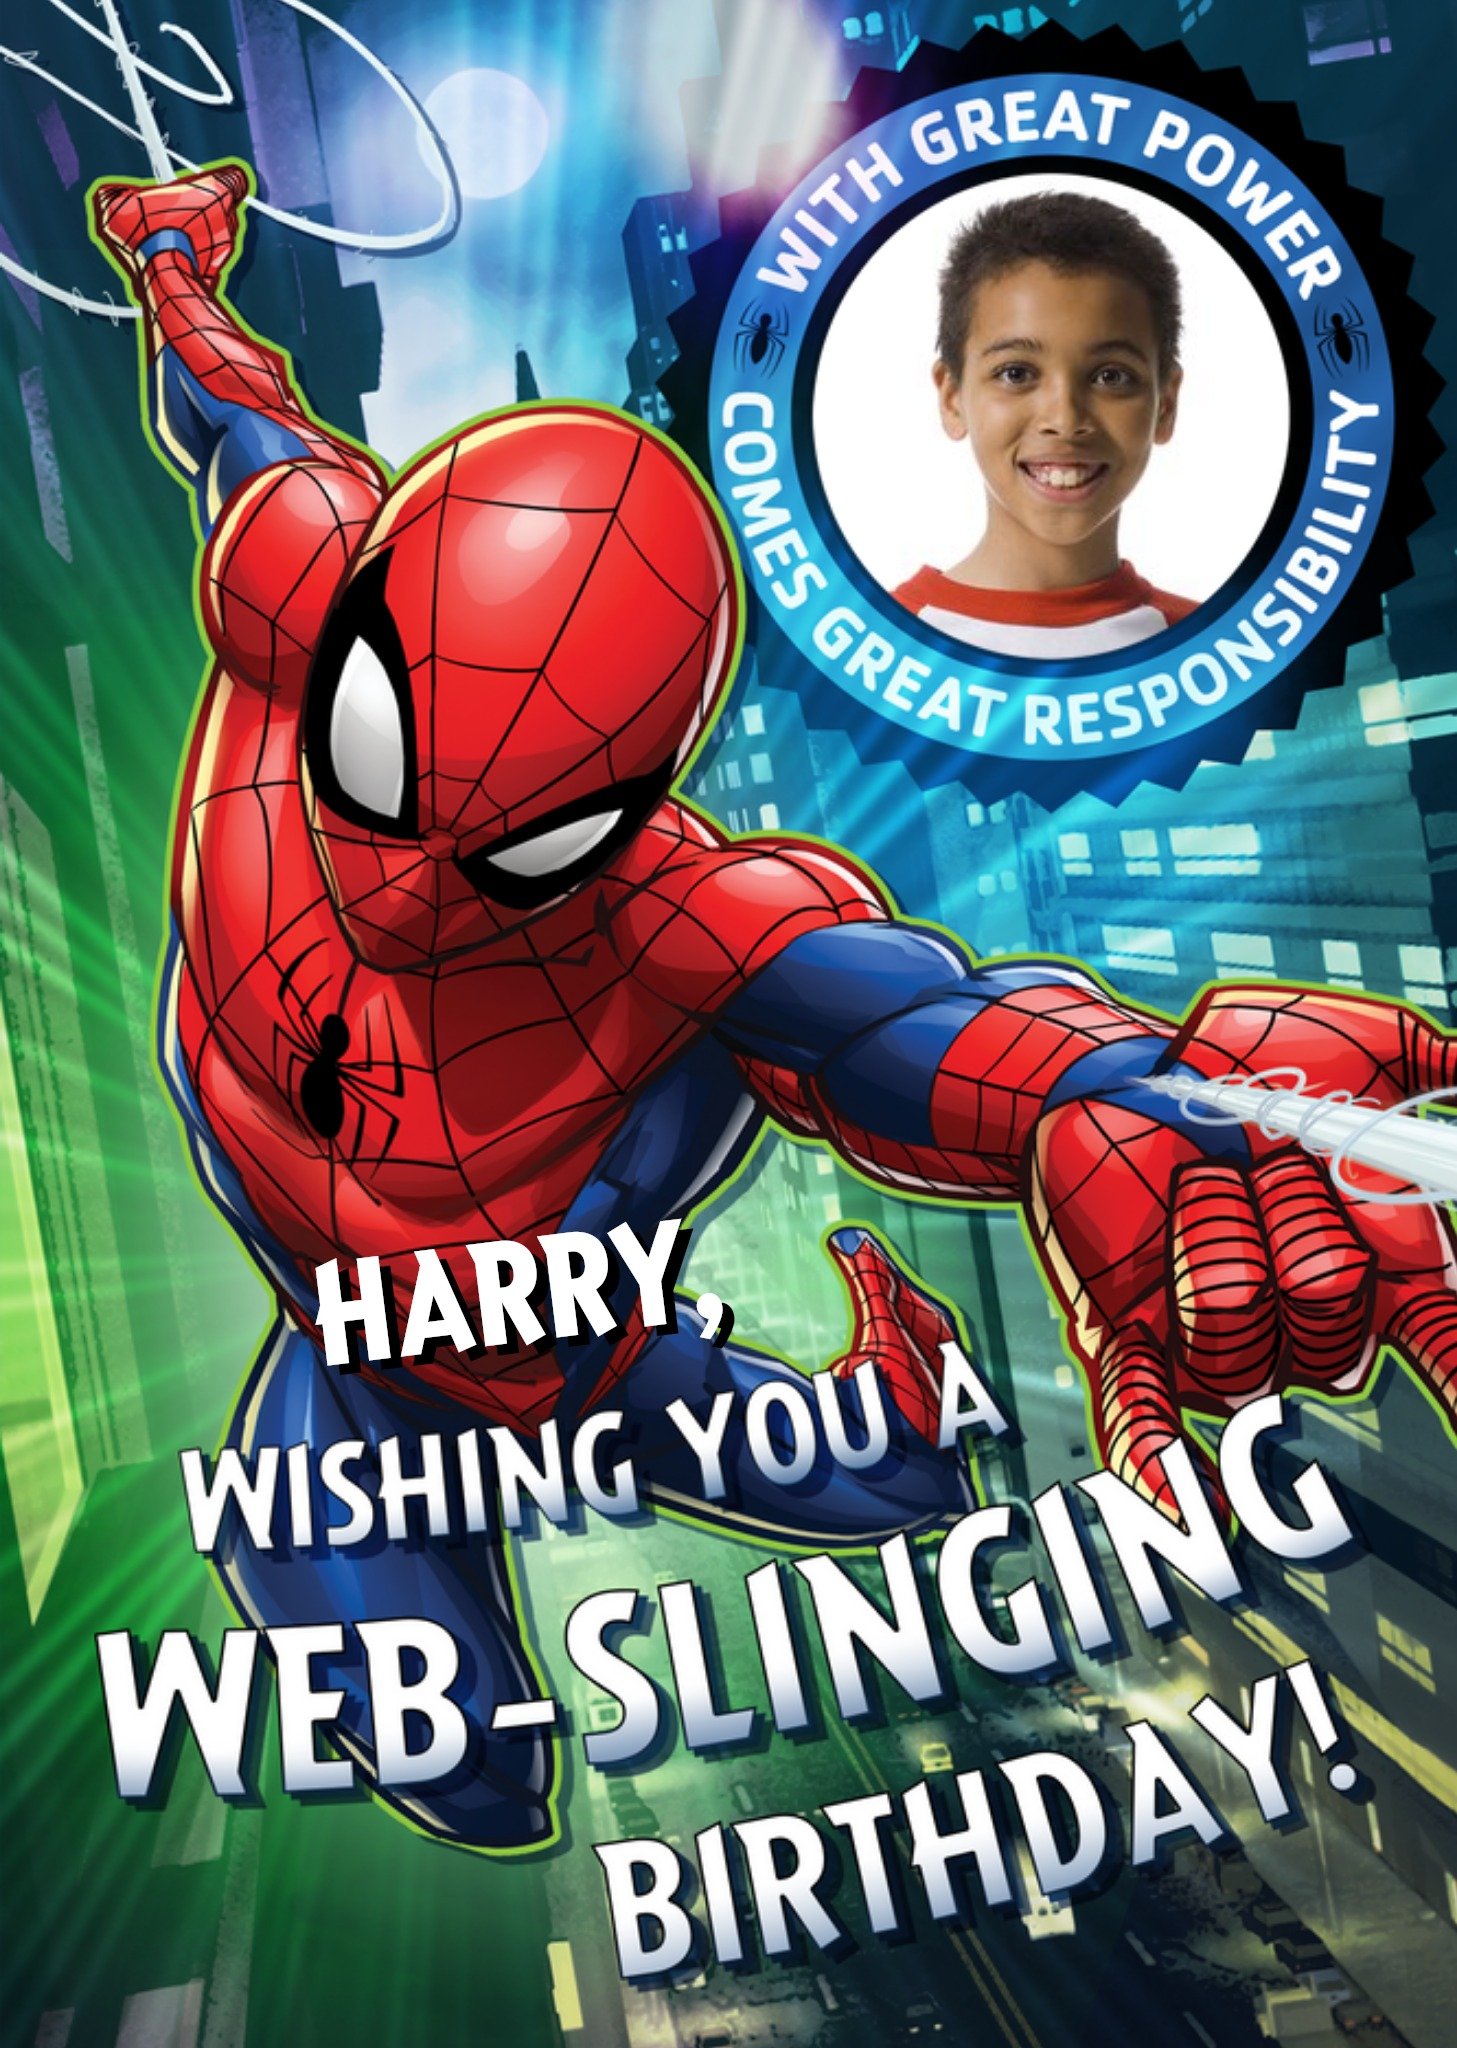 Marvel Spiderman Have A Web-Slinging Birthday Photo Card, Large